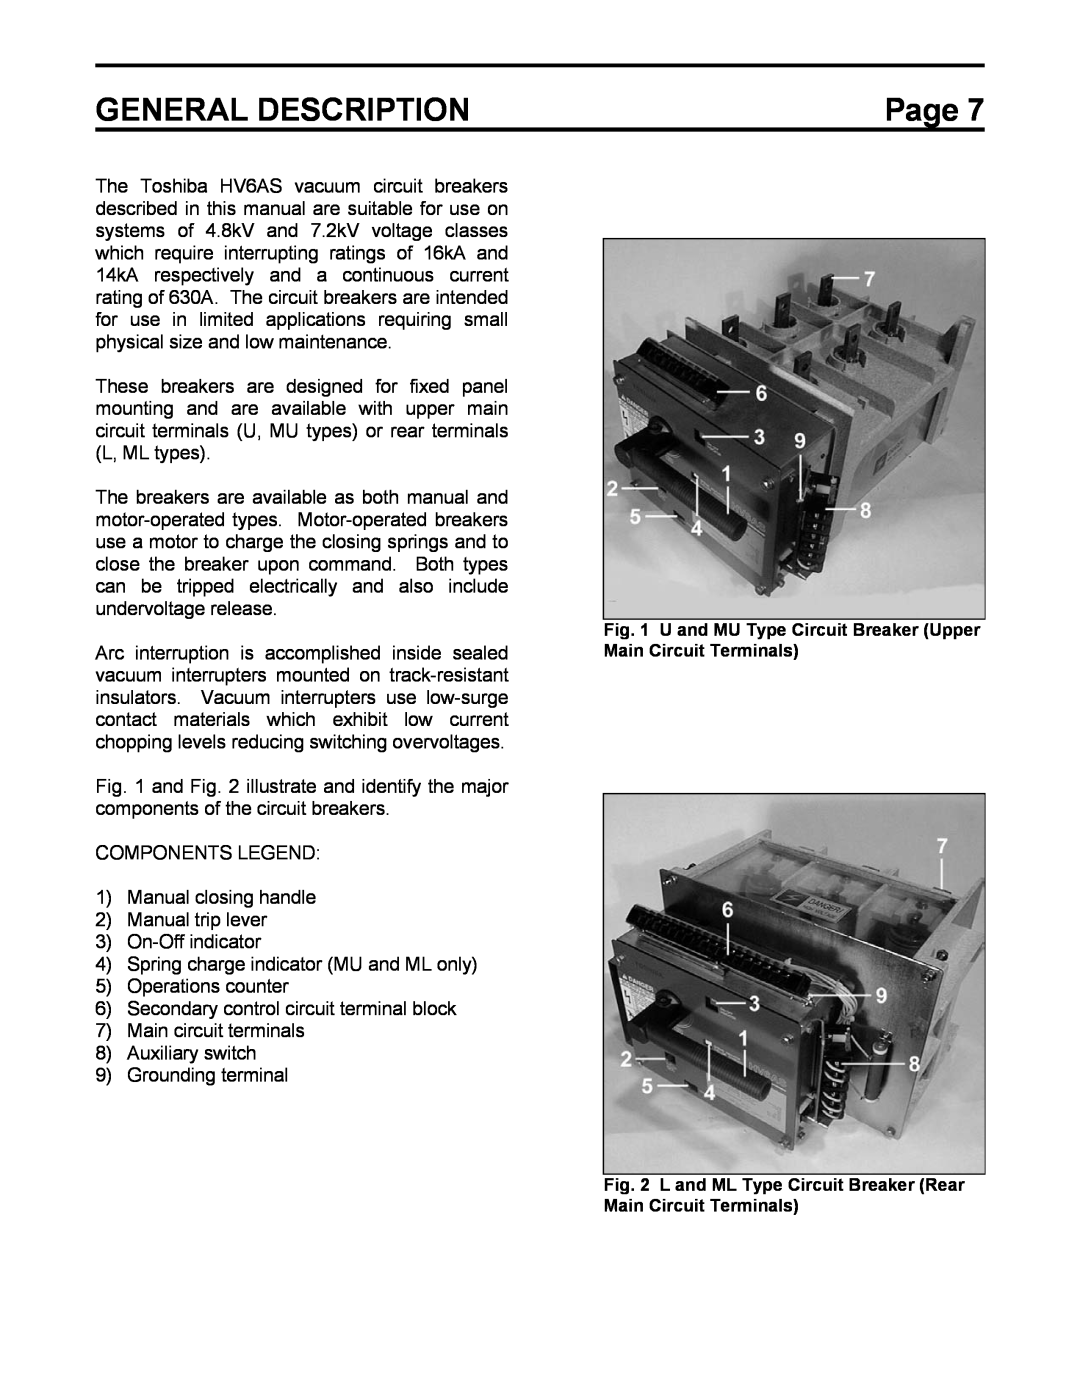 Toshiba HV6AS instruction manual General Description, Page 